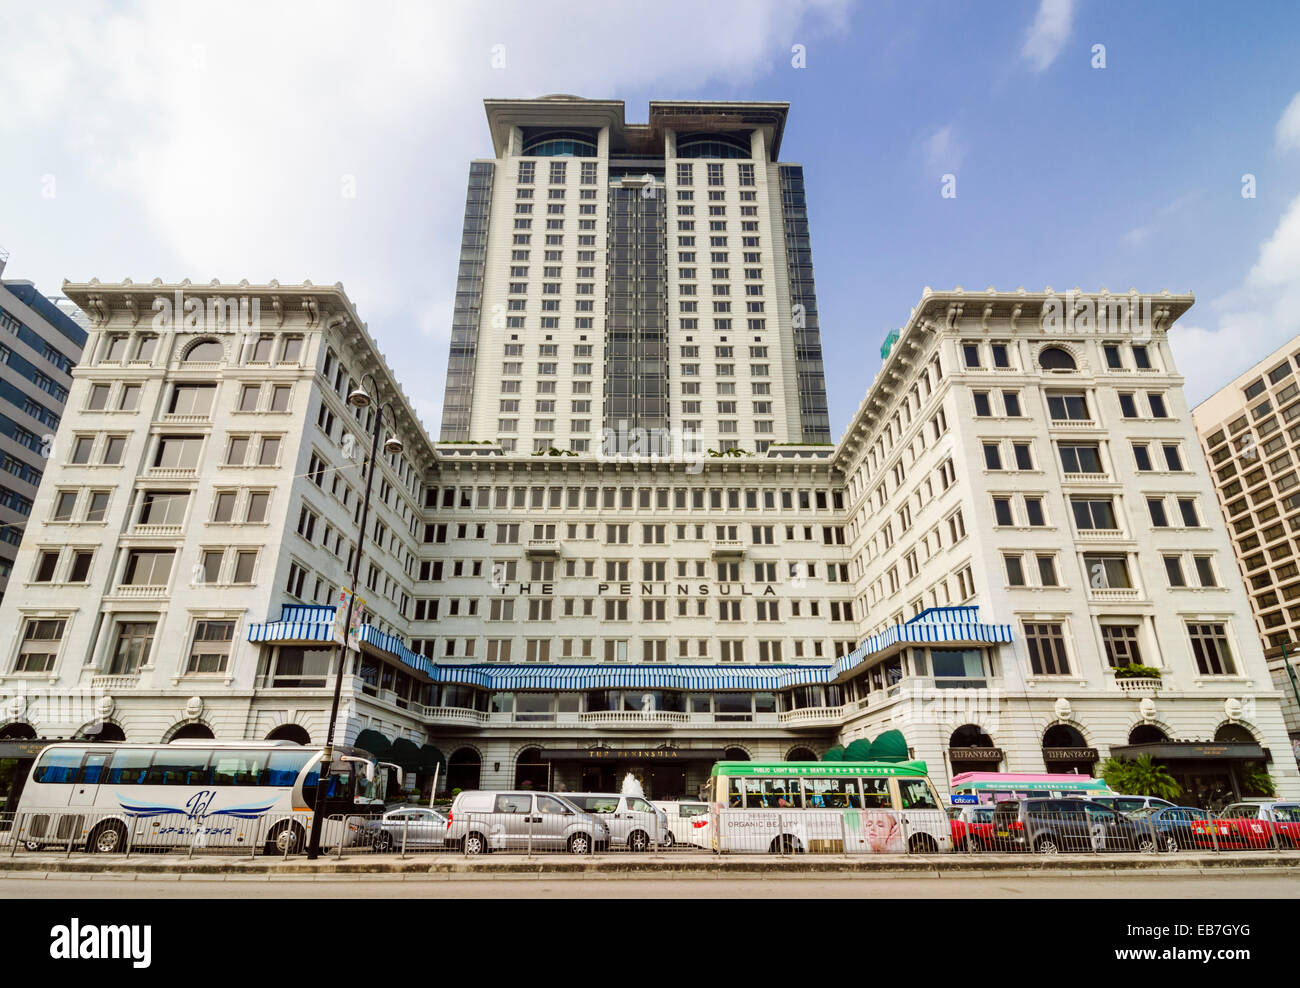 Imposante Fassade von The Peninsula Hotel, Tsim Sha Tsui, Hongkong, China Stockfoto